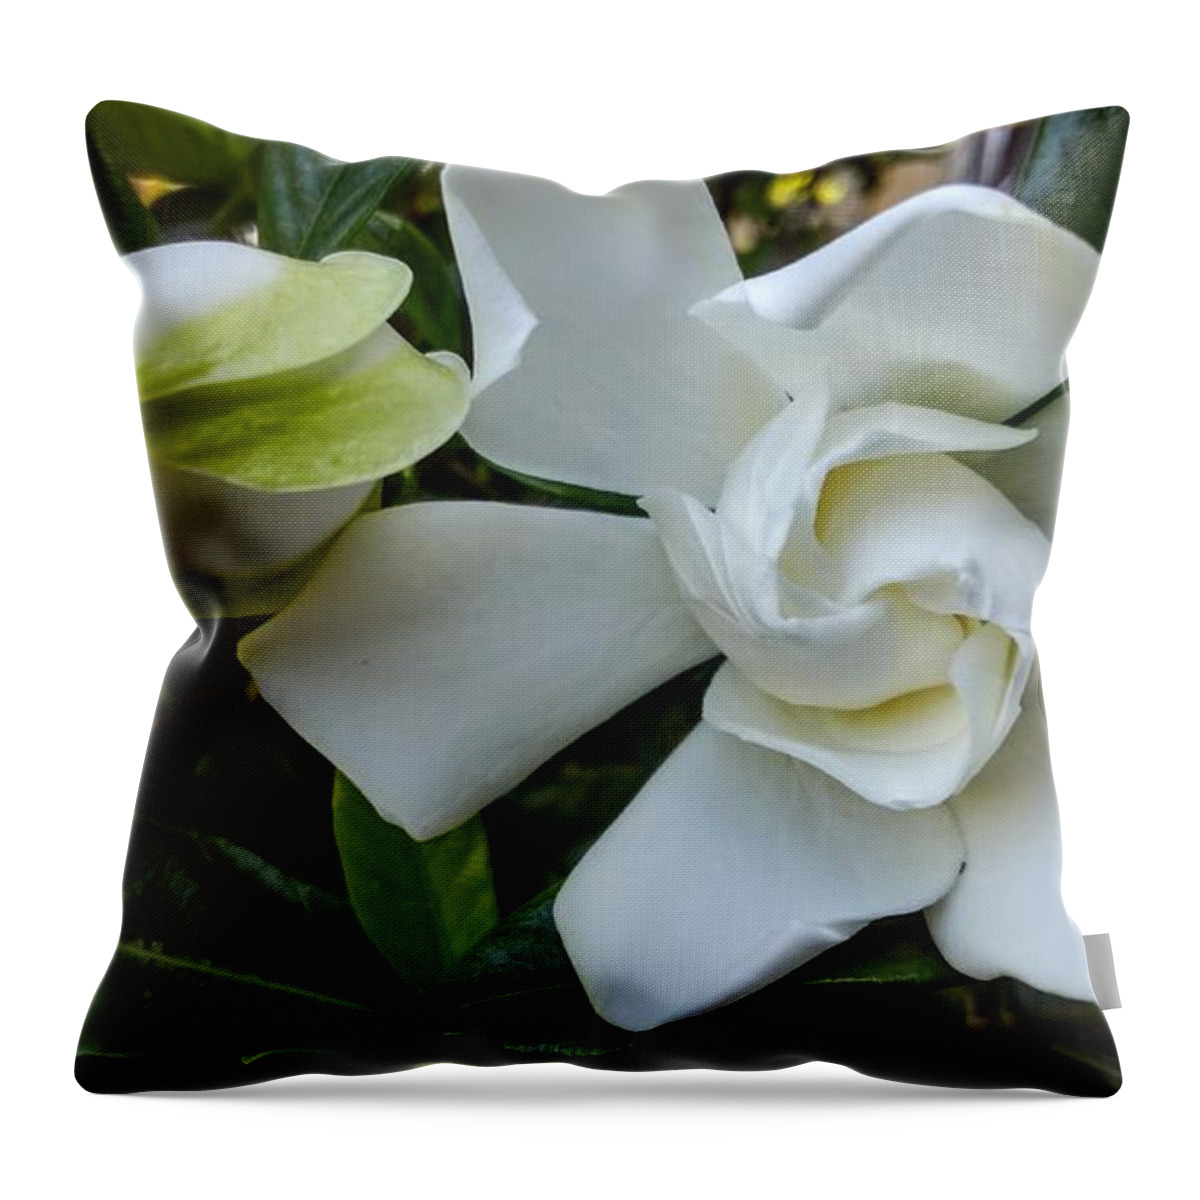  Throw Pillow featuring the photograph Gardenias by Heather E Harman